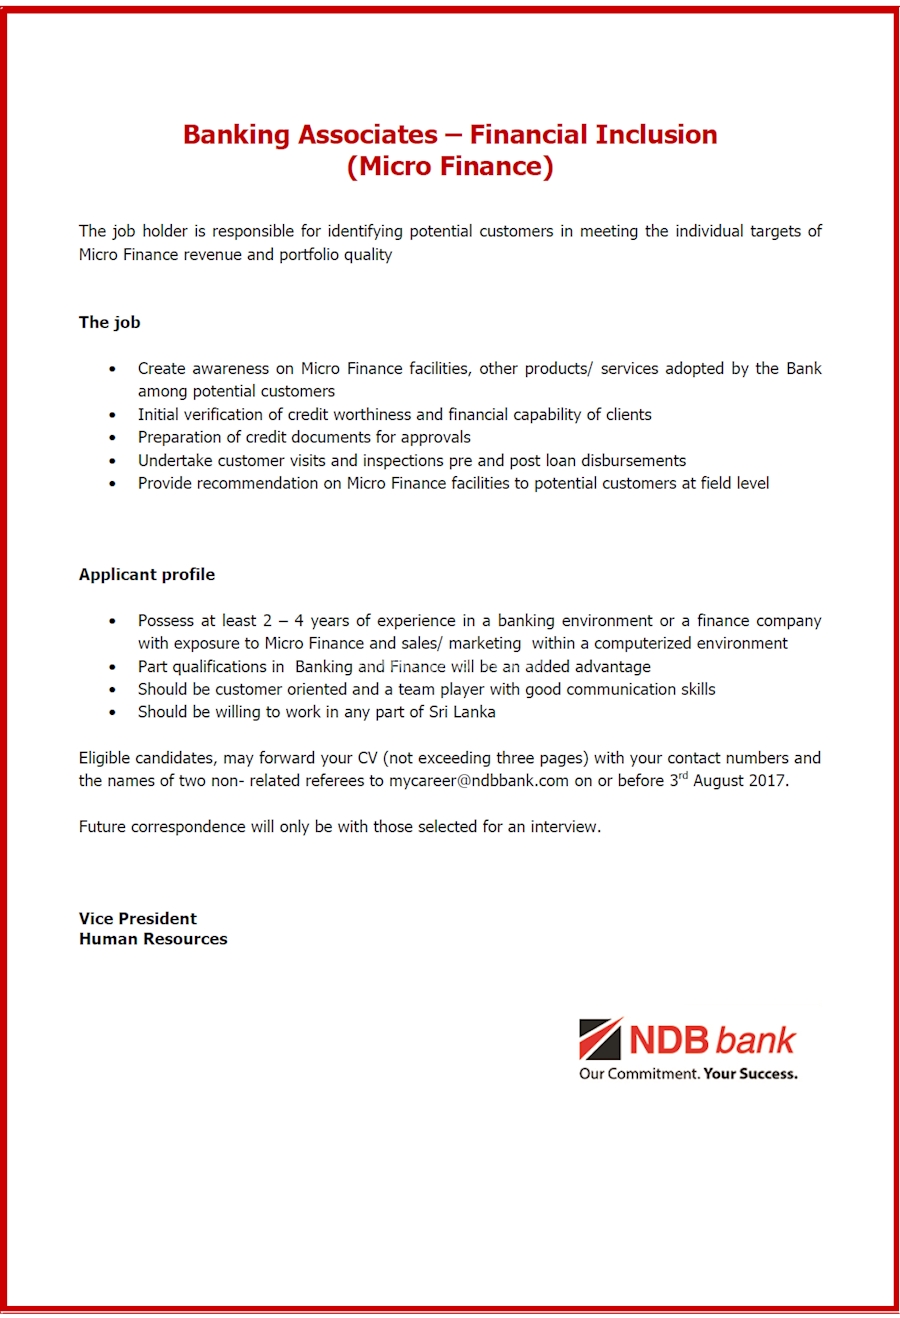 Banking Associates-Financial Inclusion 